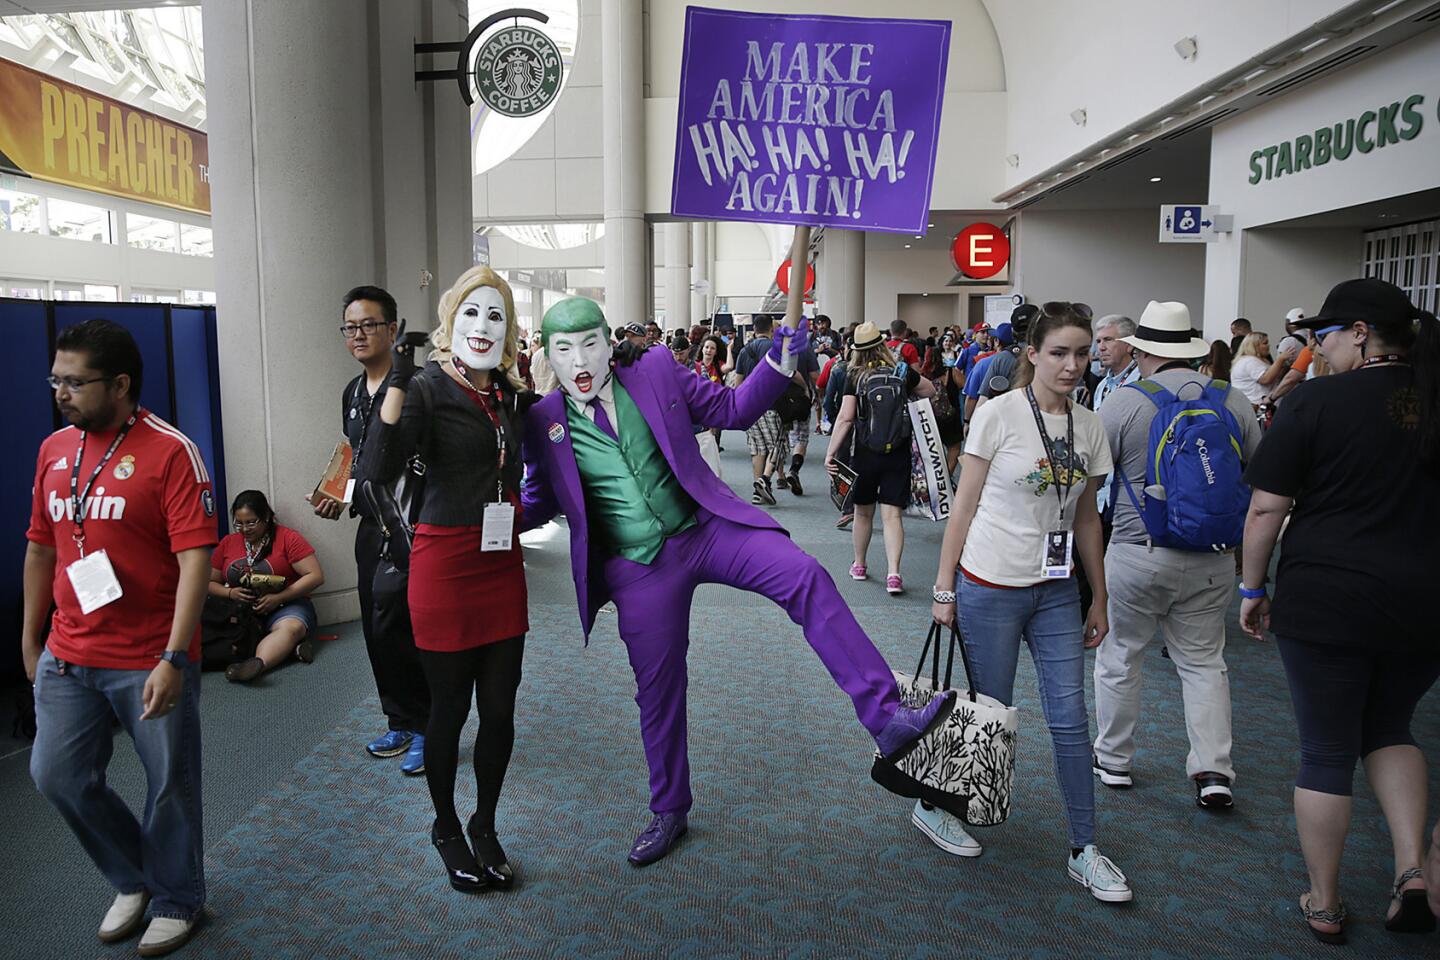 Inside Comic-Con 2016: Fandemonium and costumes galore!